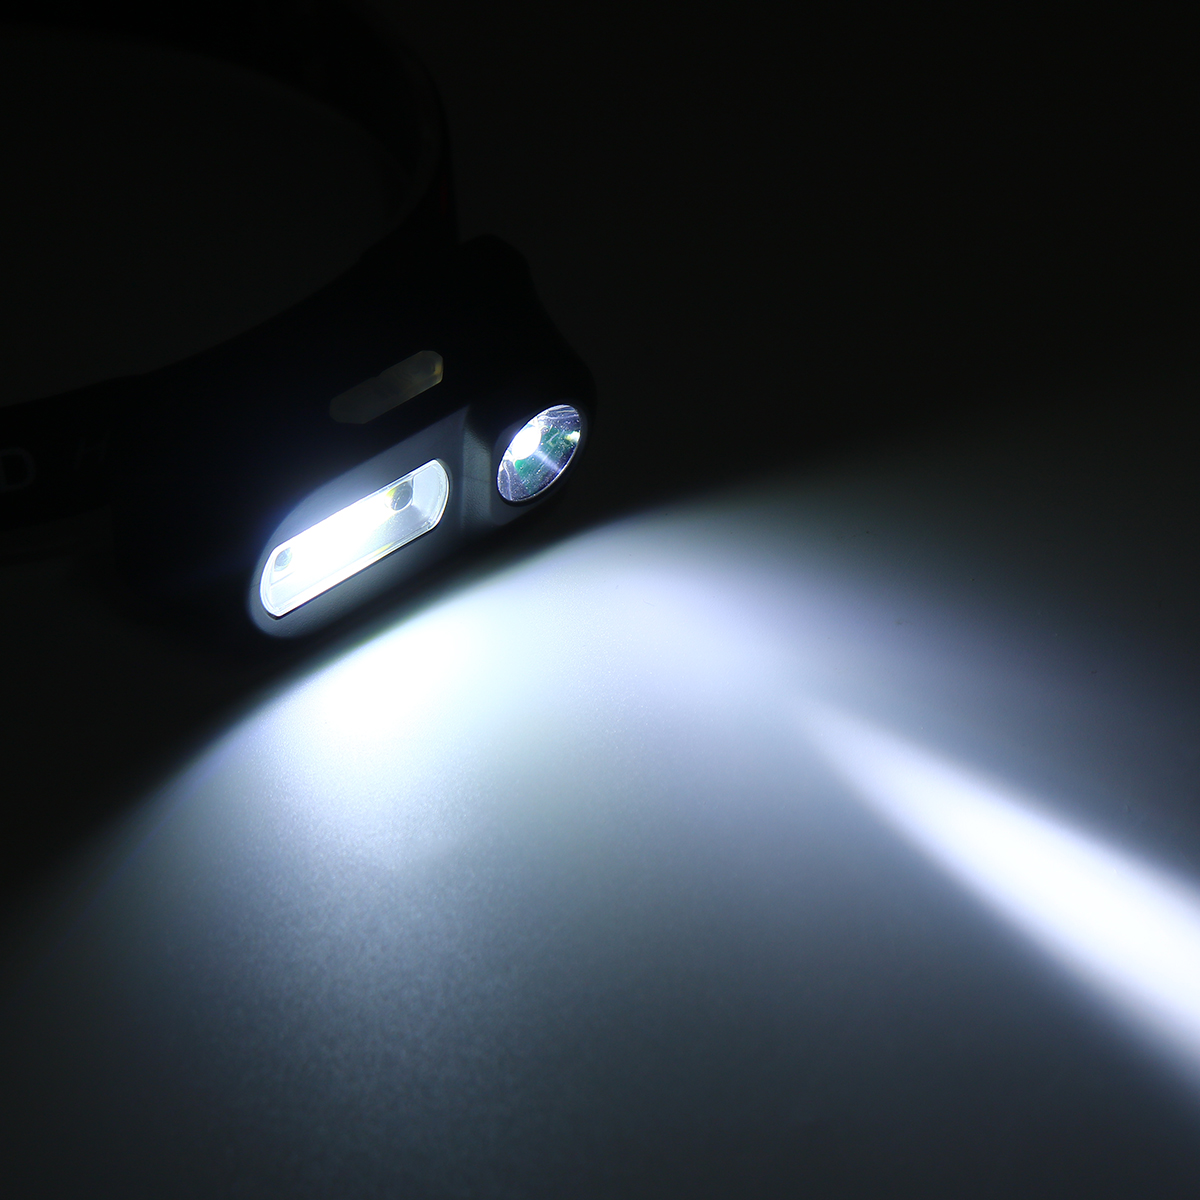 4-Modes-COB-Sensing-Induction-LED-Headlamp-USB-Rechargeable-Bike-Light-Night-Fishing-Headlight-Senso-1746716